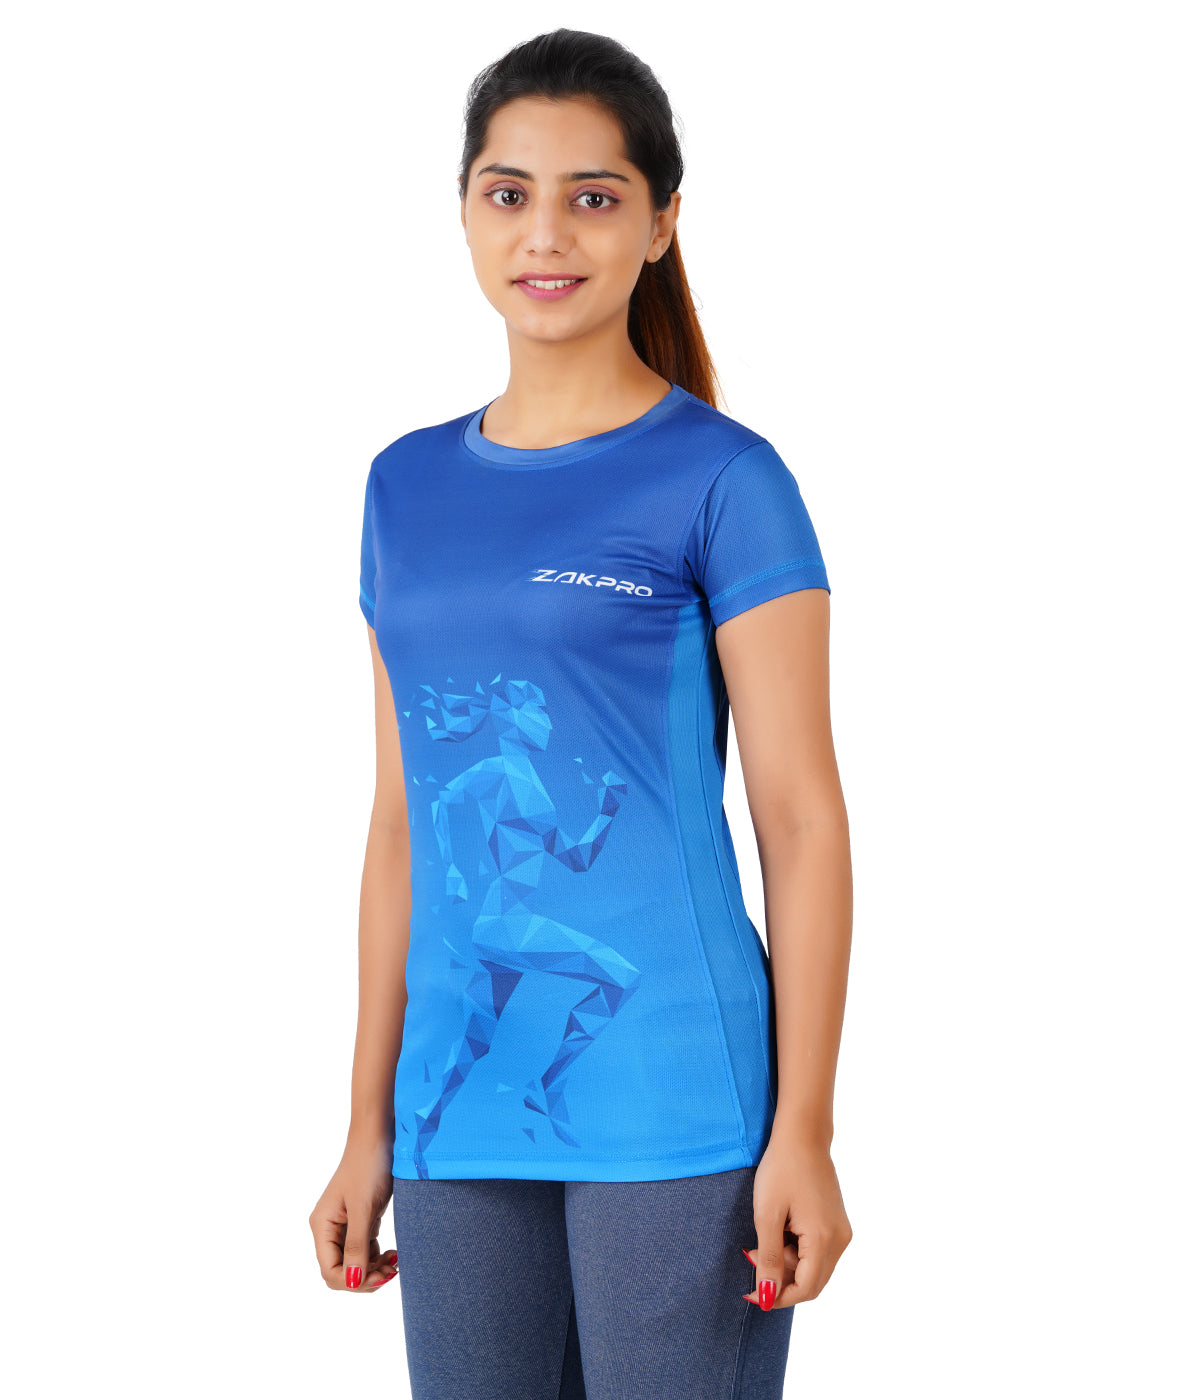 ZAKPRO Sports Tees for Women (Bluish Run) - Cyclop.in